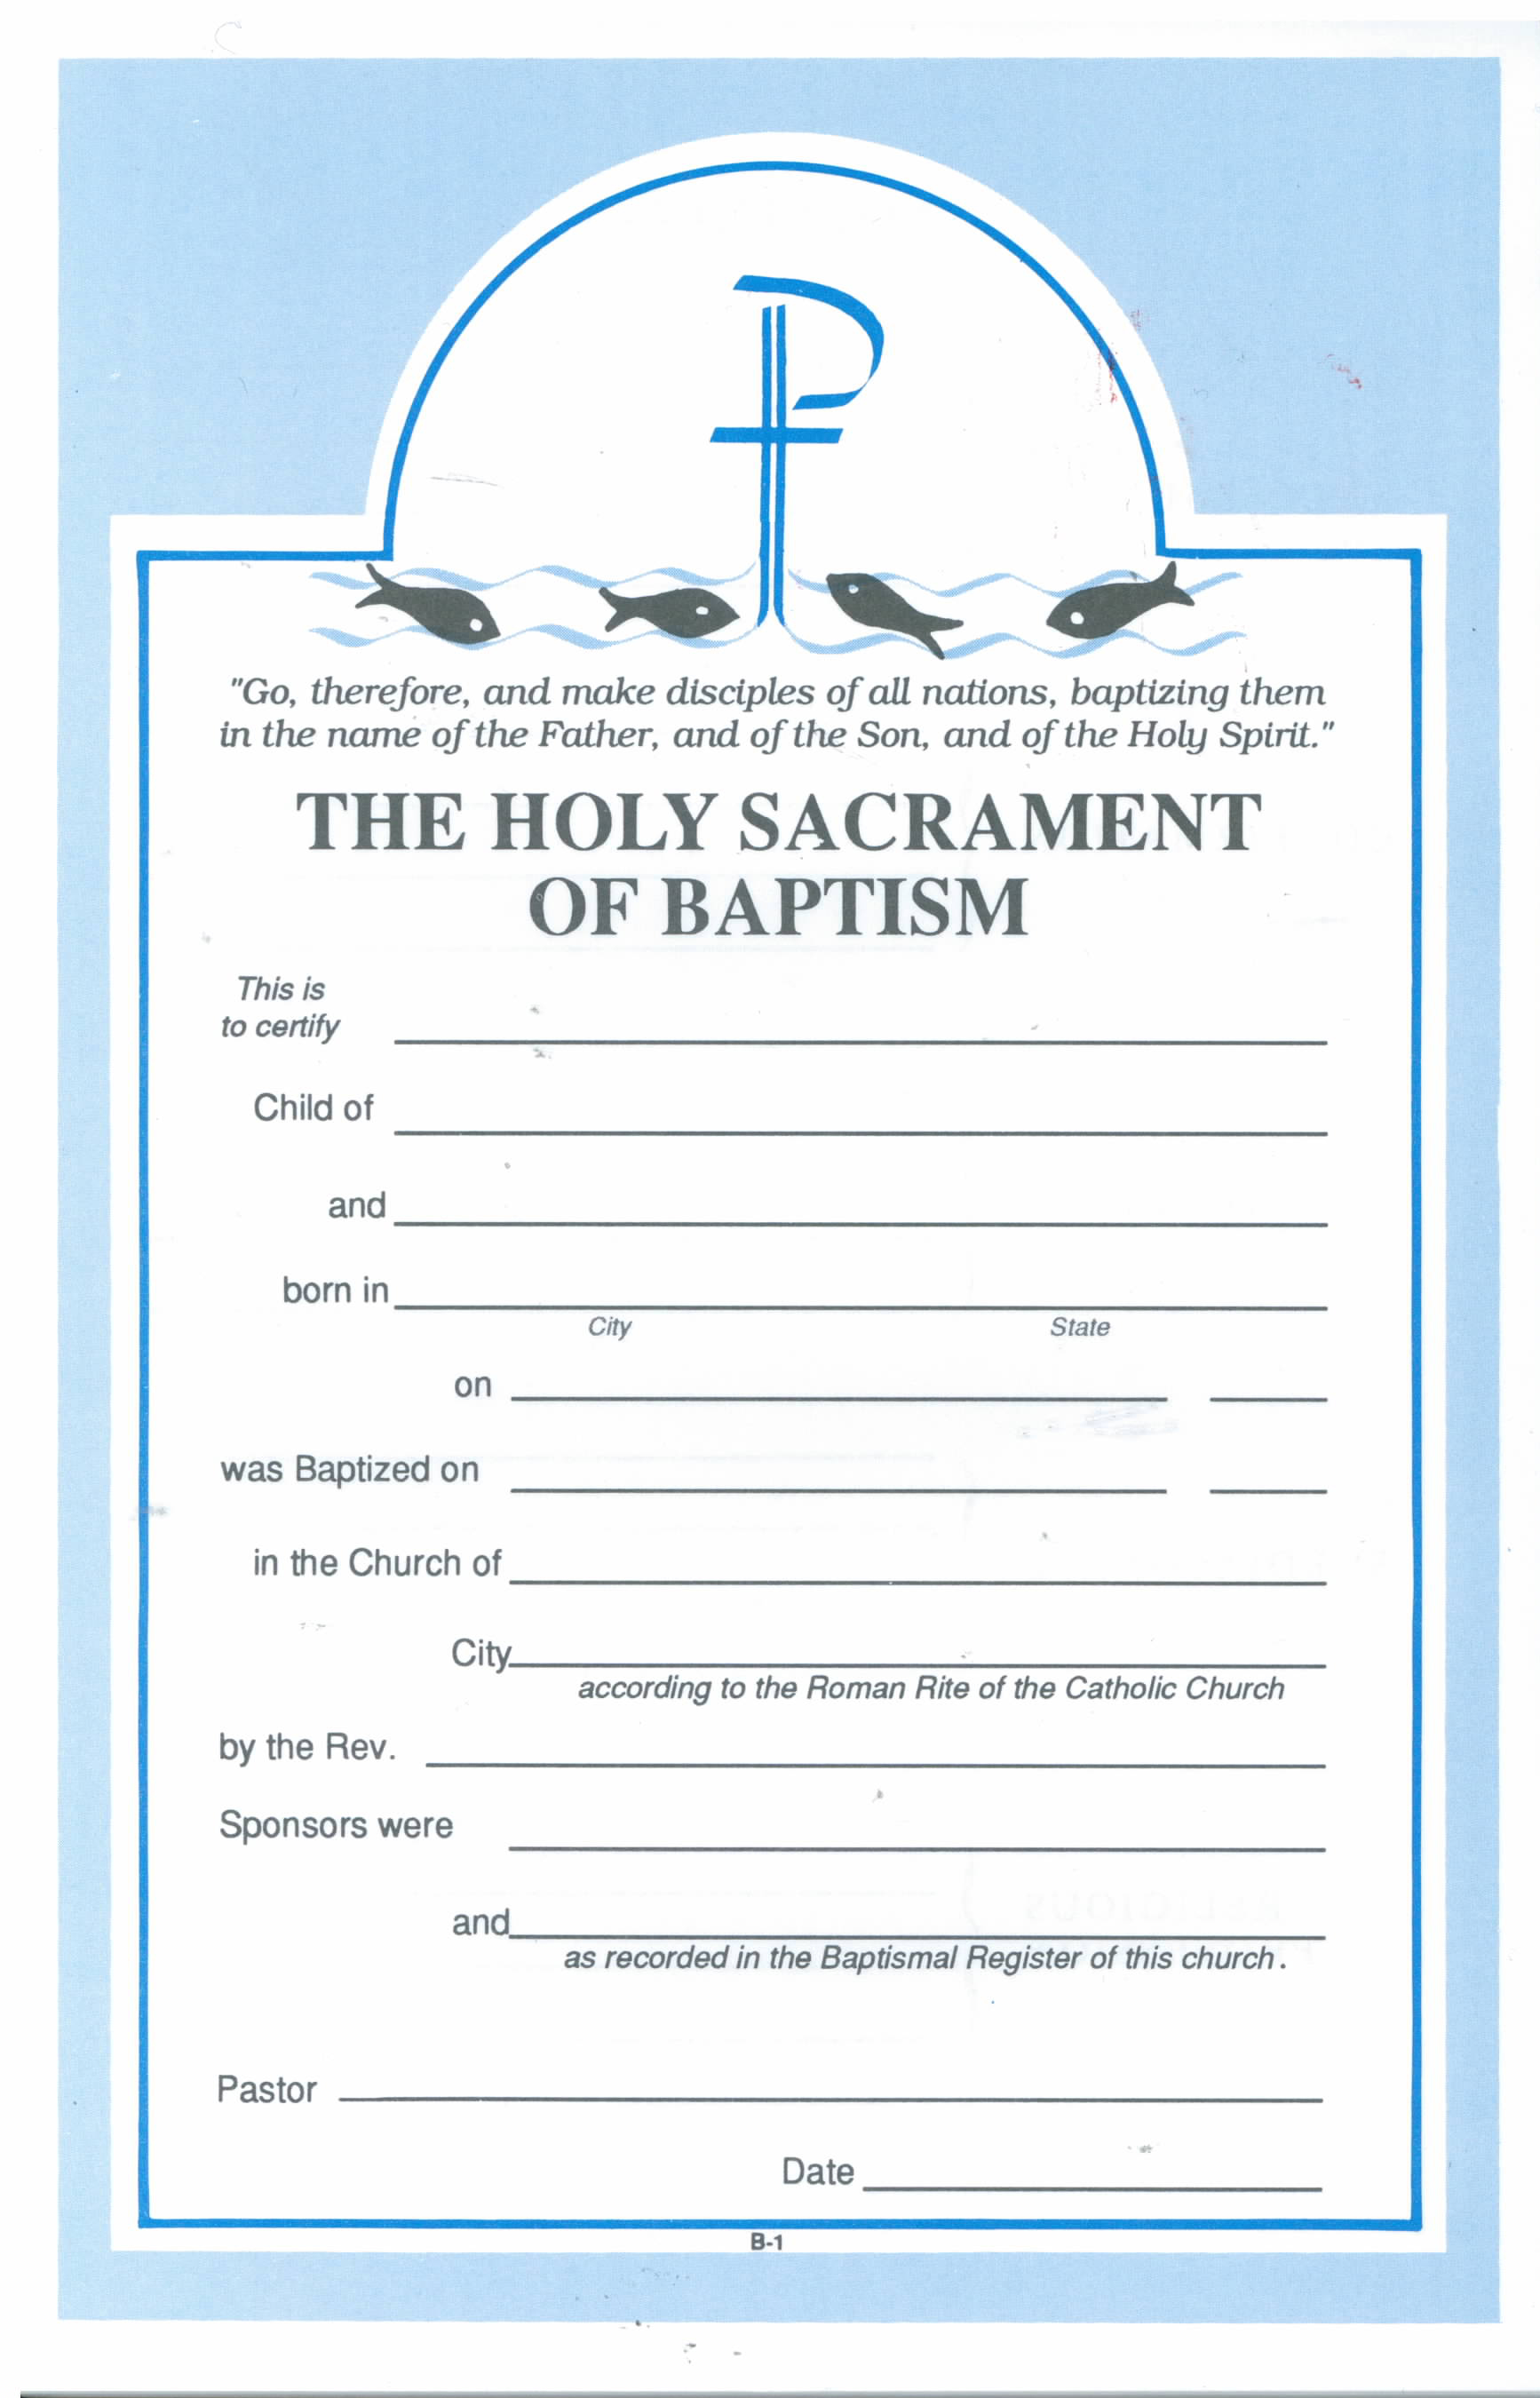 Holy Sacrament Of Baptism Certificate 50 per pad 8-RUB1